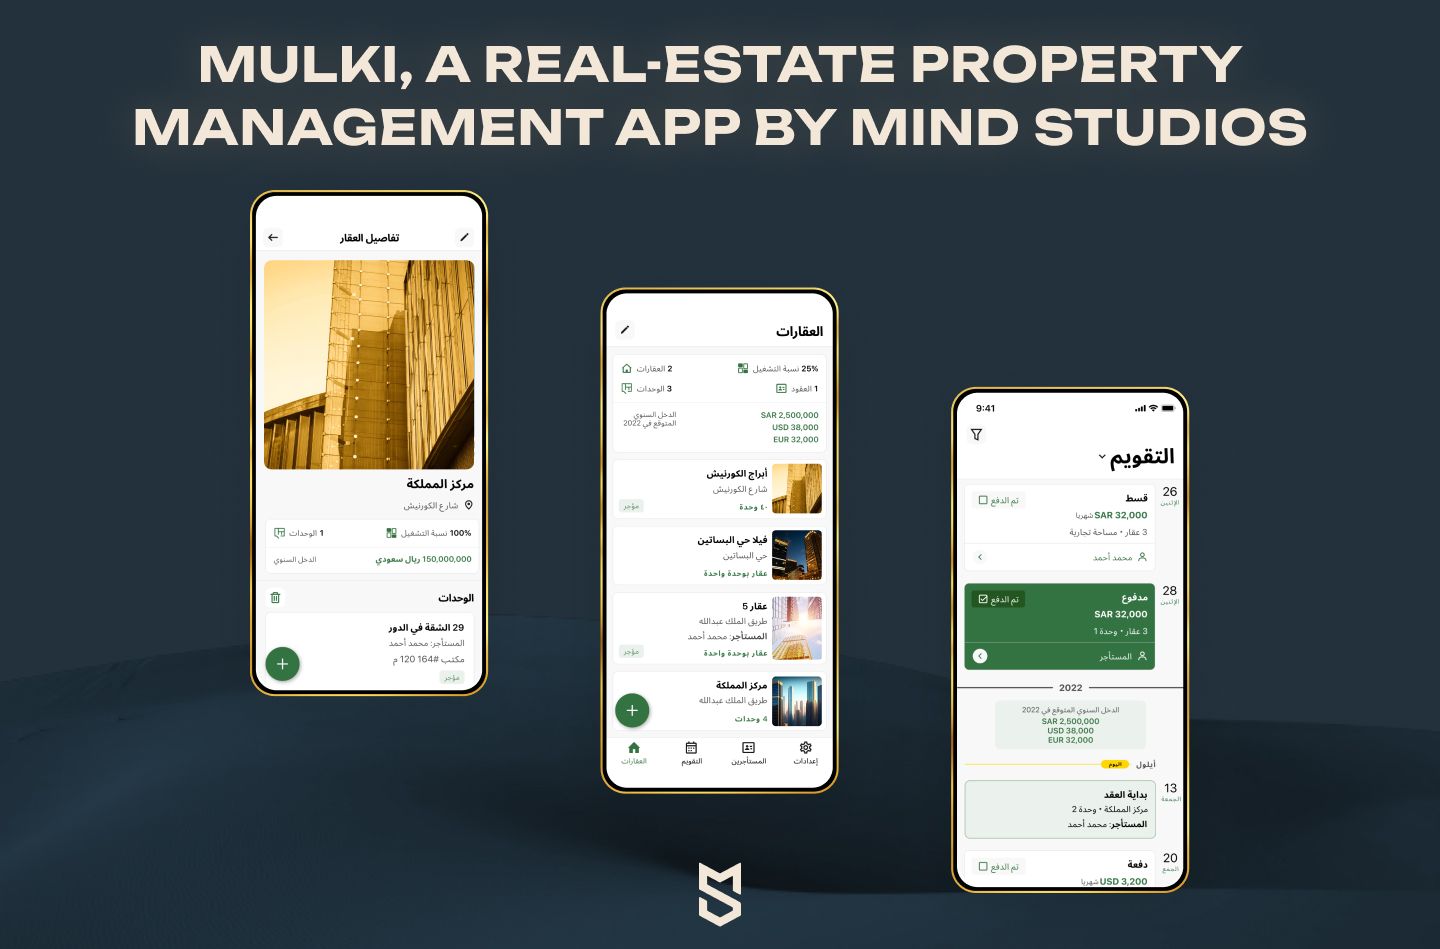 Mulki, a real-estate property management app by Mind Studios